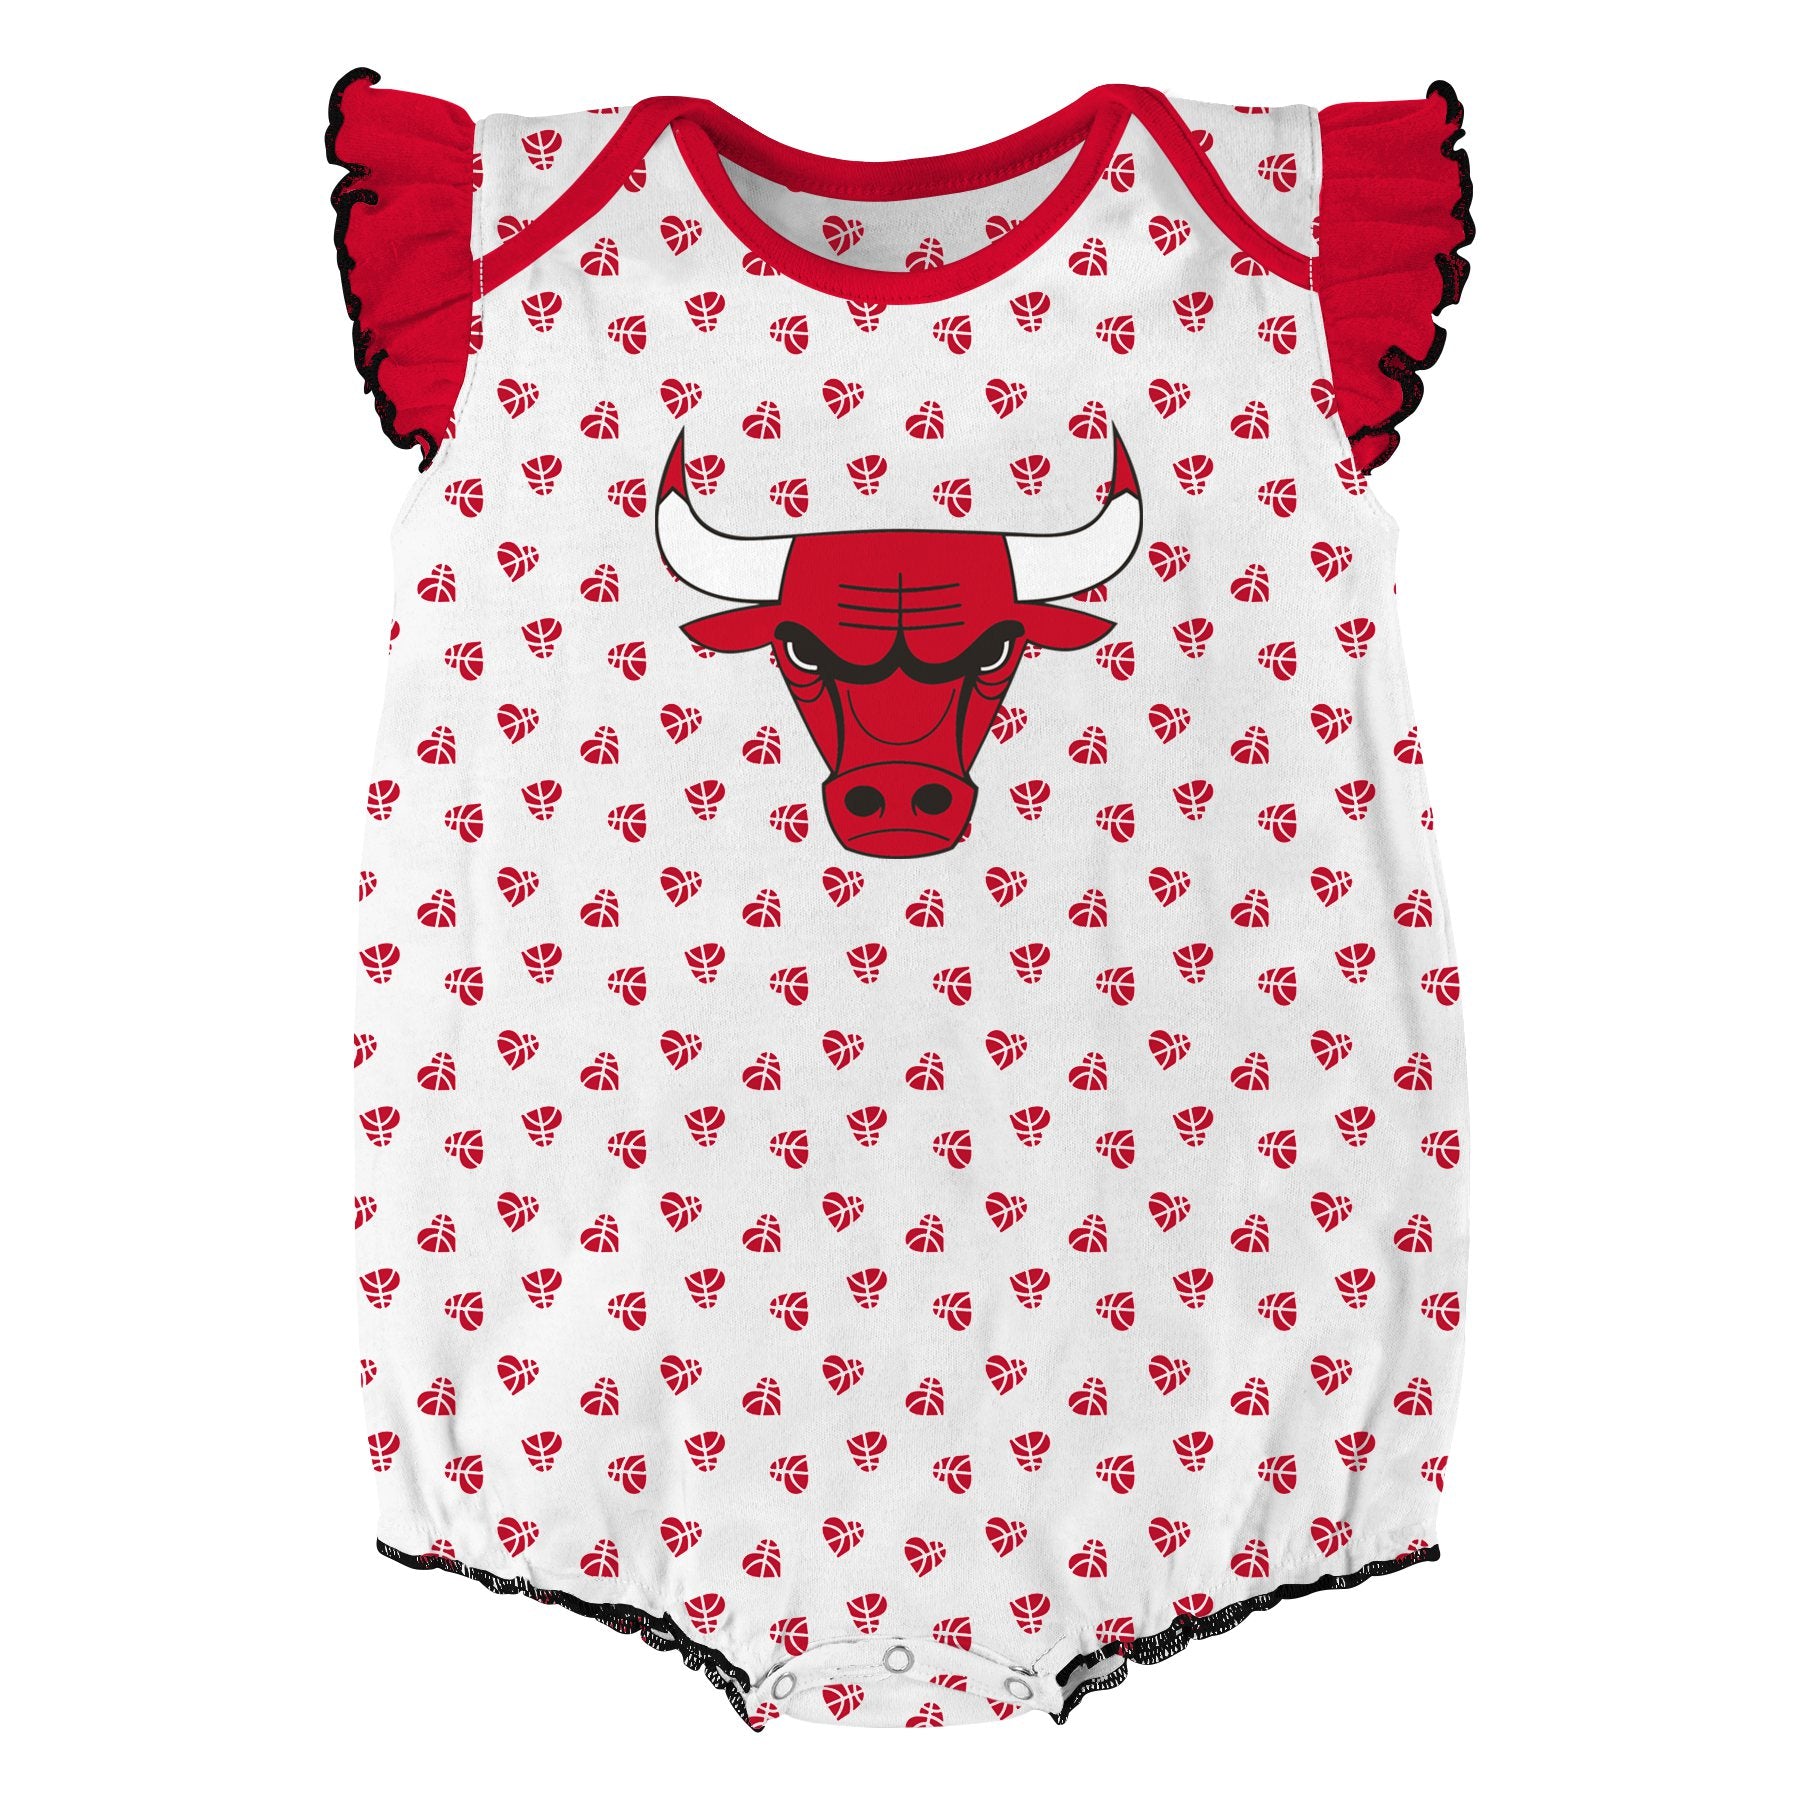 Outerstuff Infant Red/Heathered Gray Chicago Bulls Little Baller - 2-Pack  Bodysuit Set